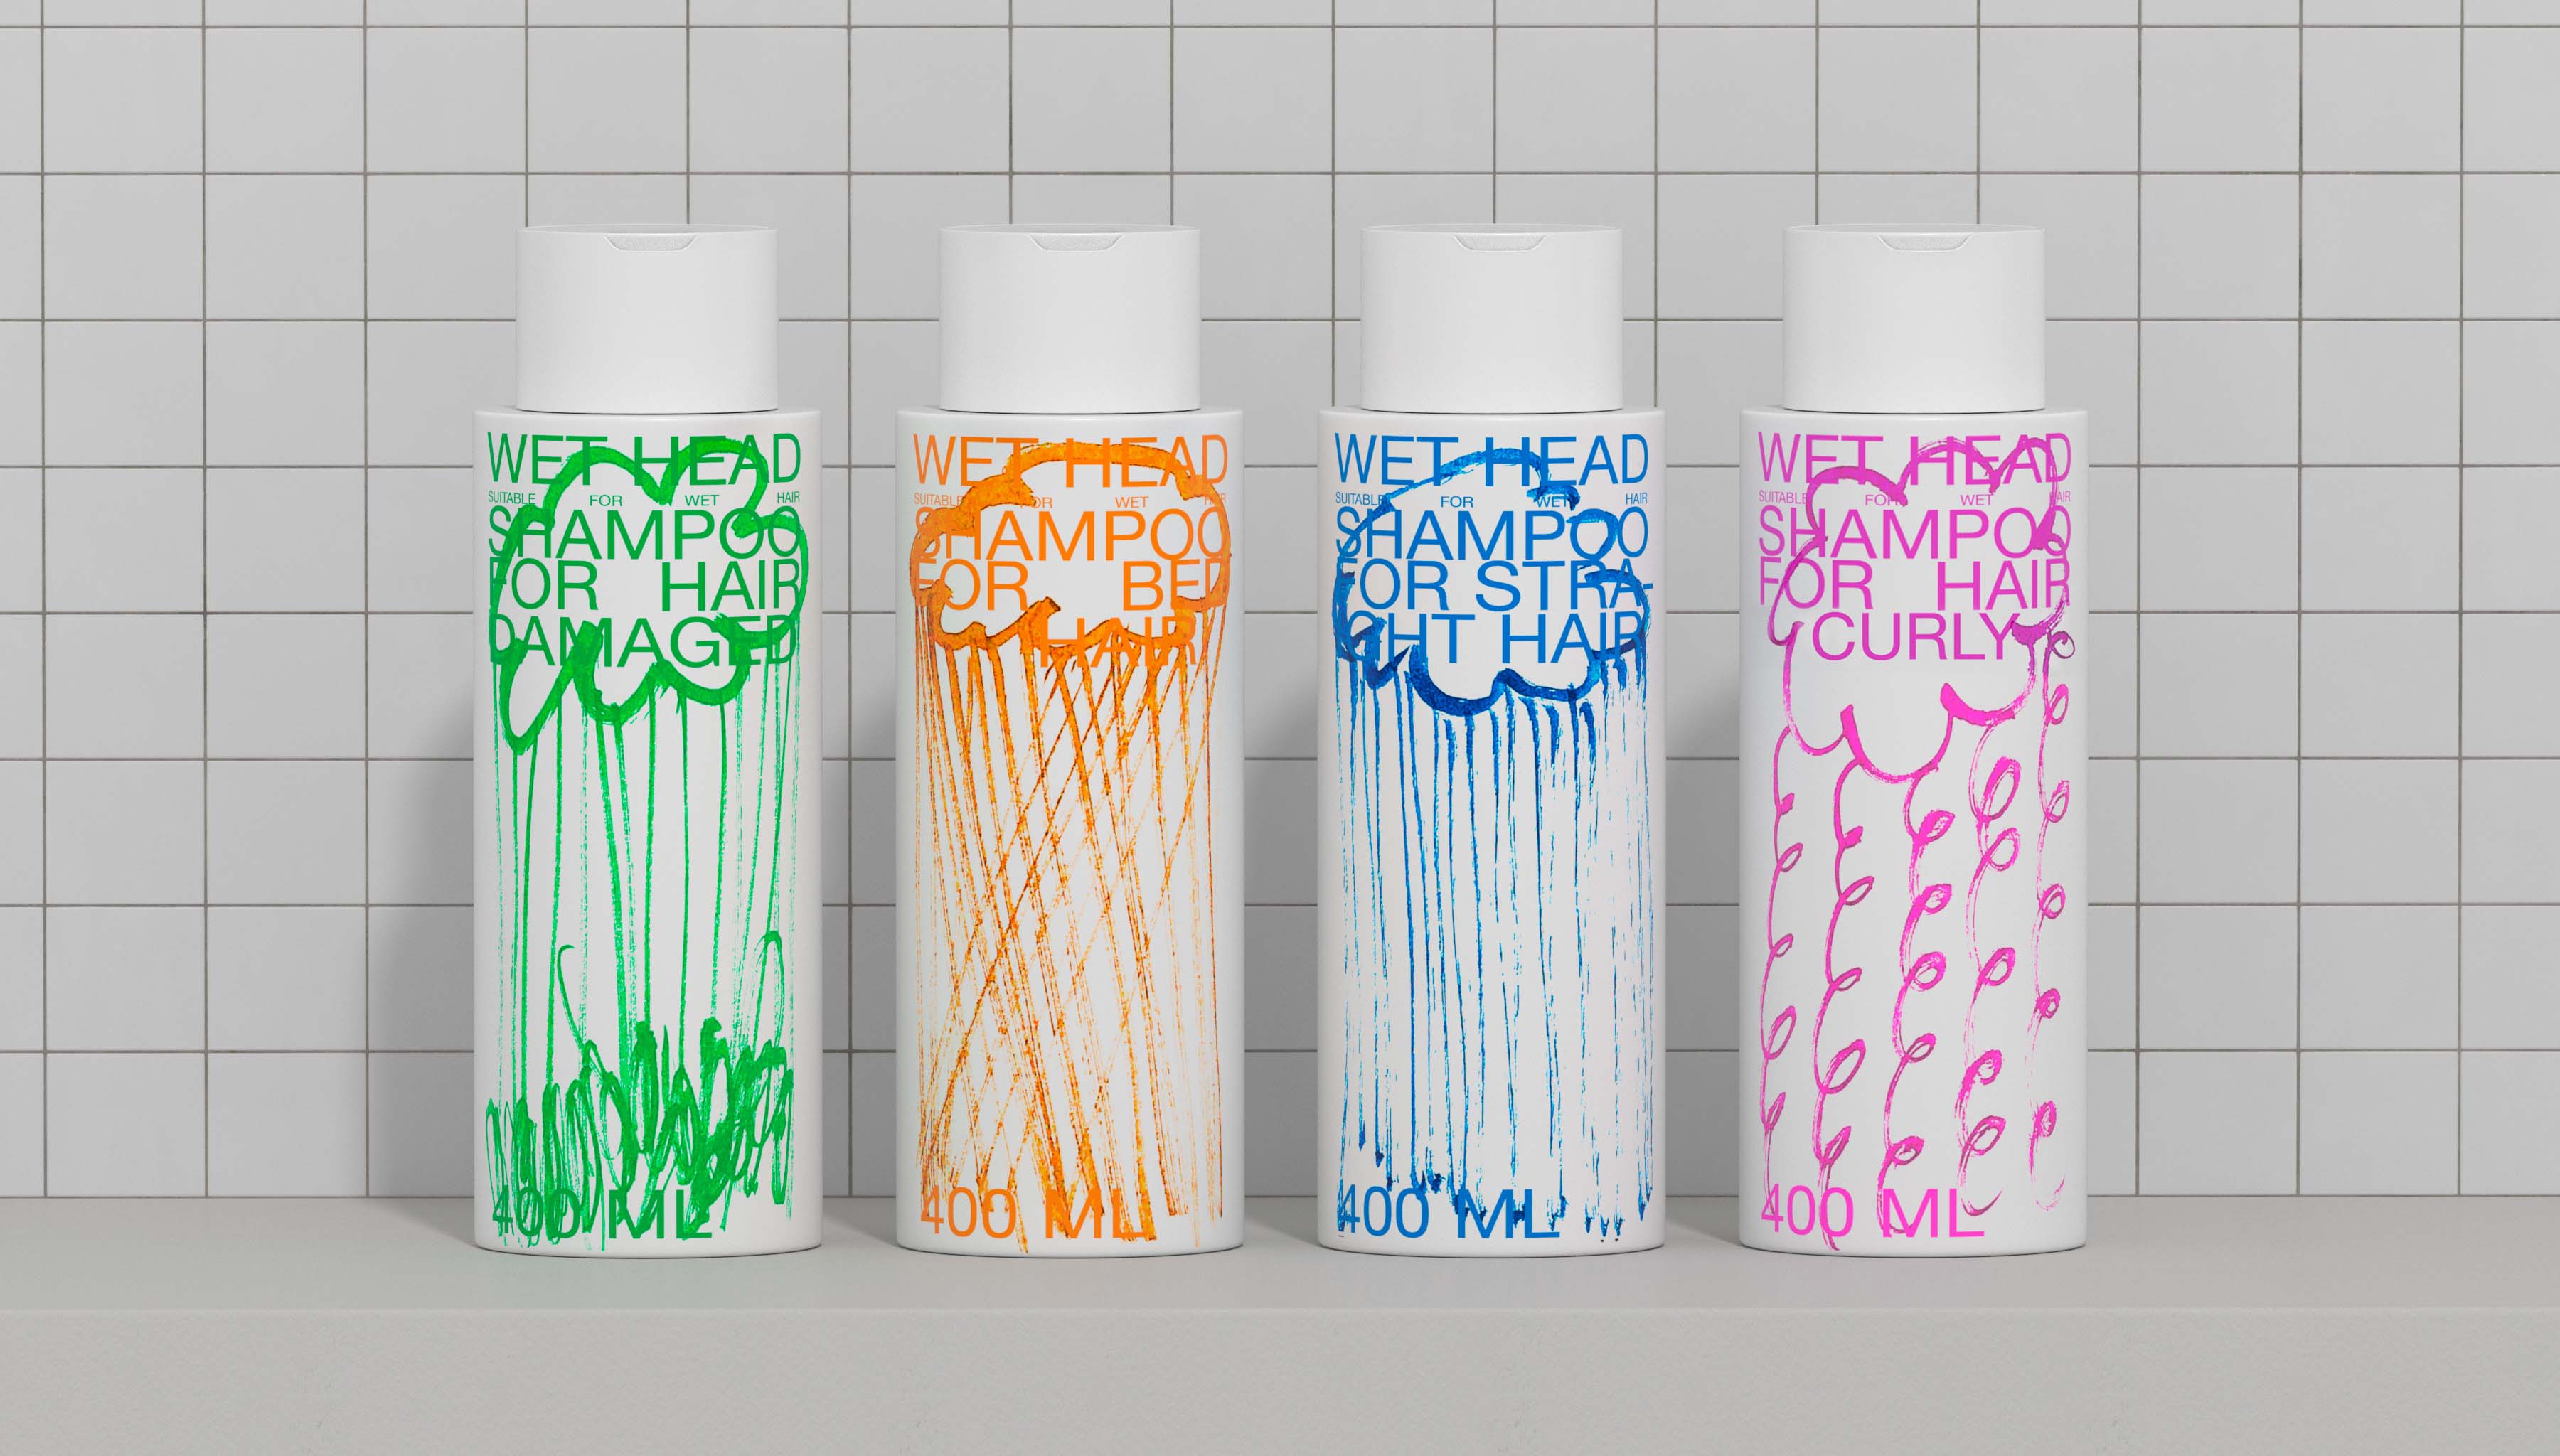 Wet Head Shampoo Student Packaging Design Concept